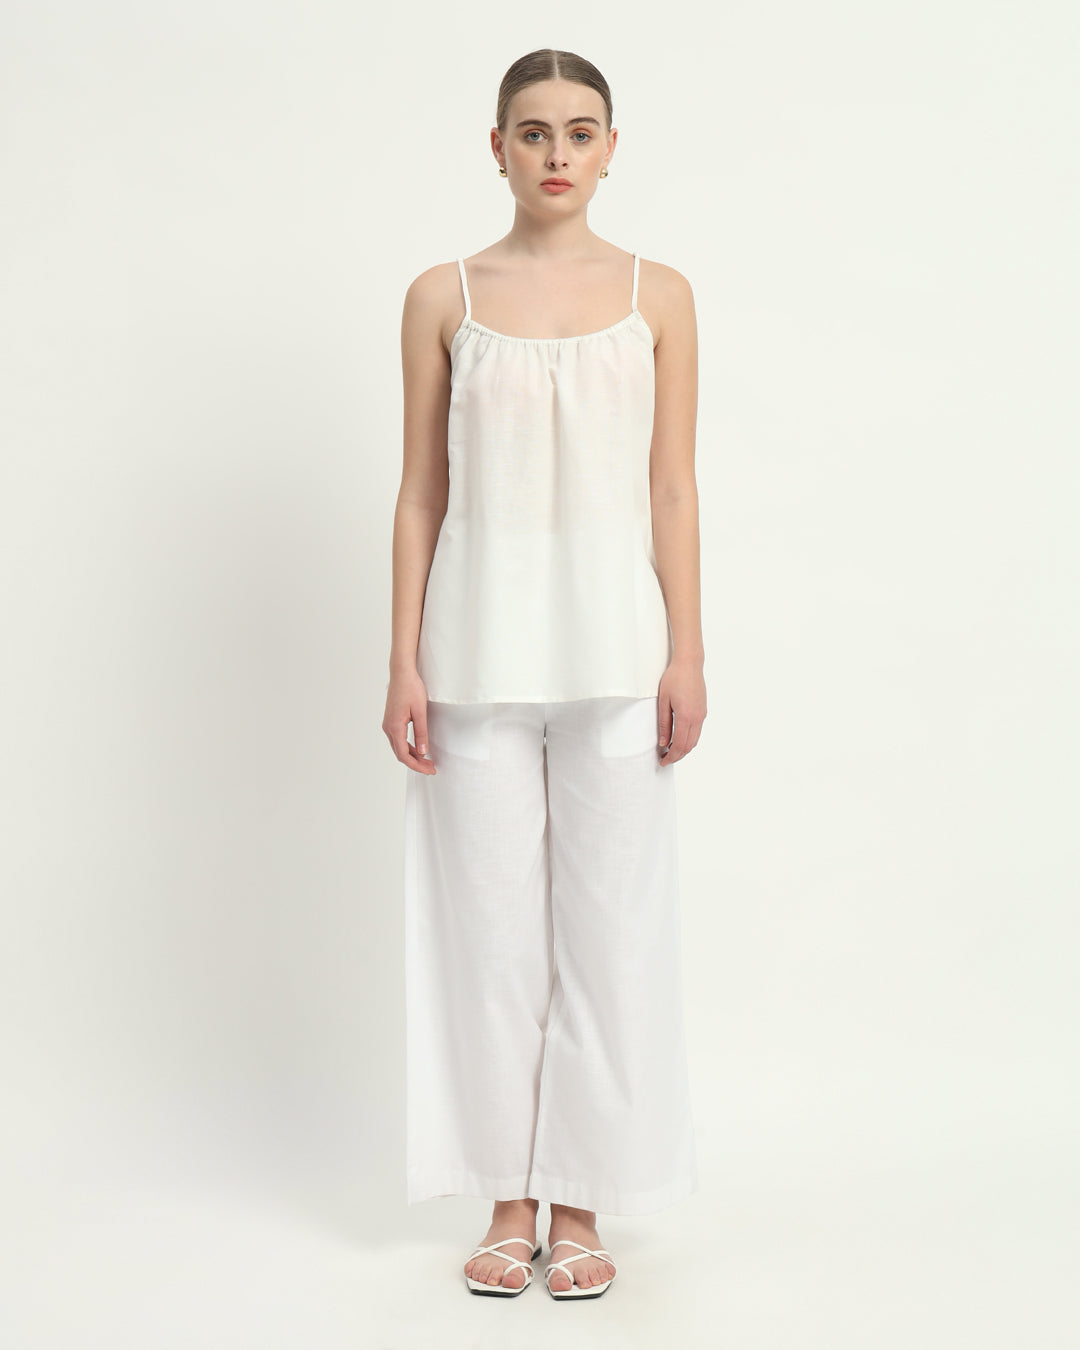 Pants Matching Set- White Linen Easy Breeze Adjustable Neck